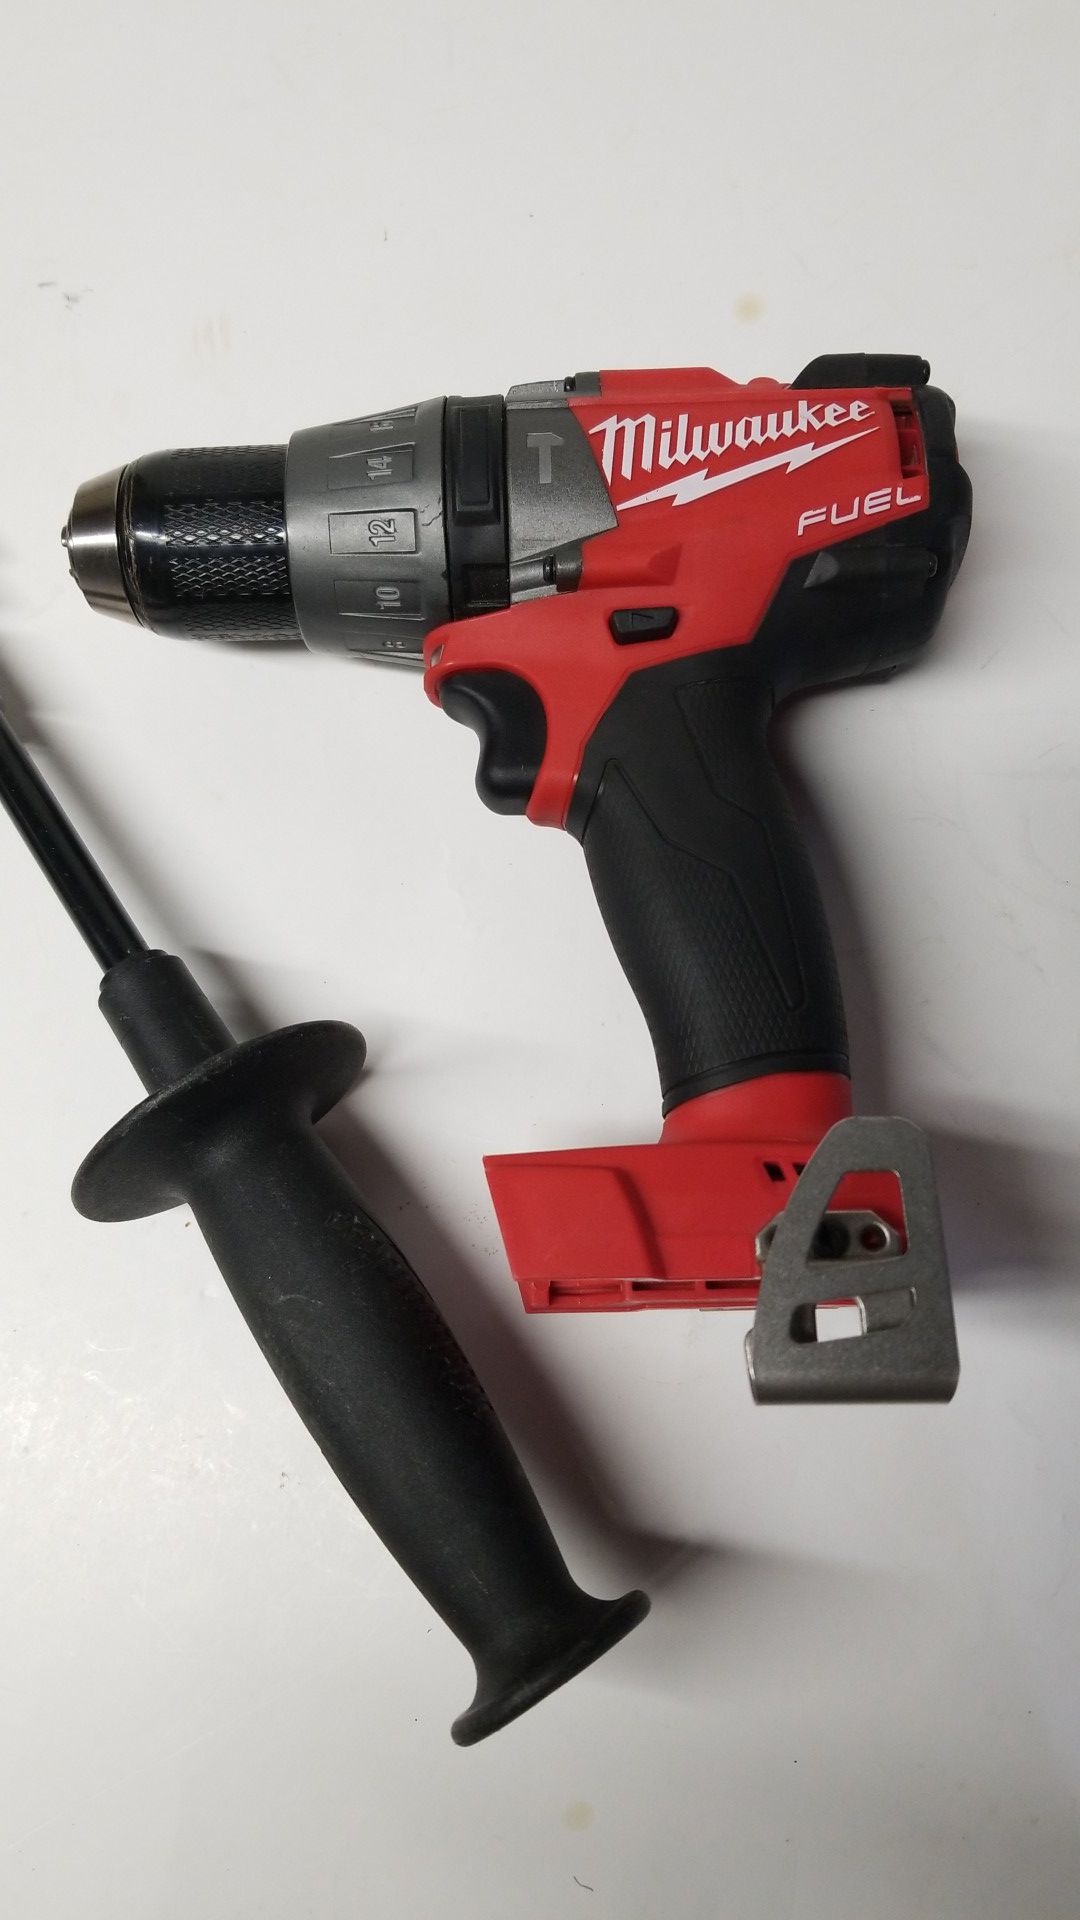 Milwaukee fuel hammer drill driver